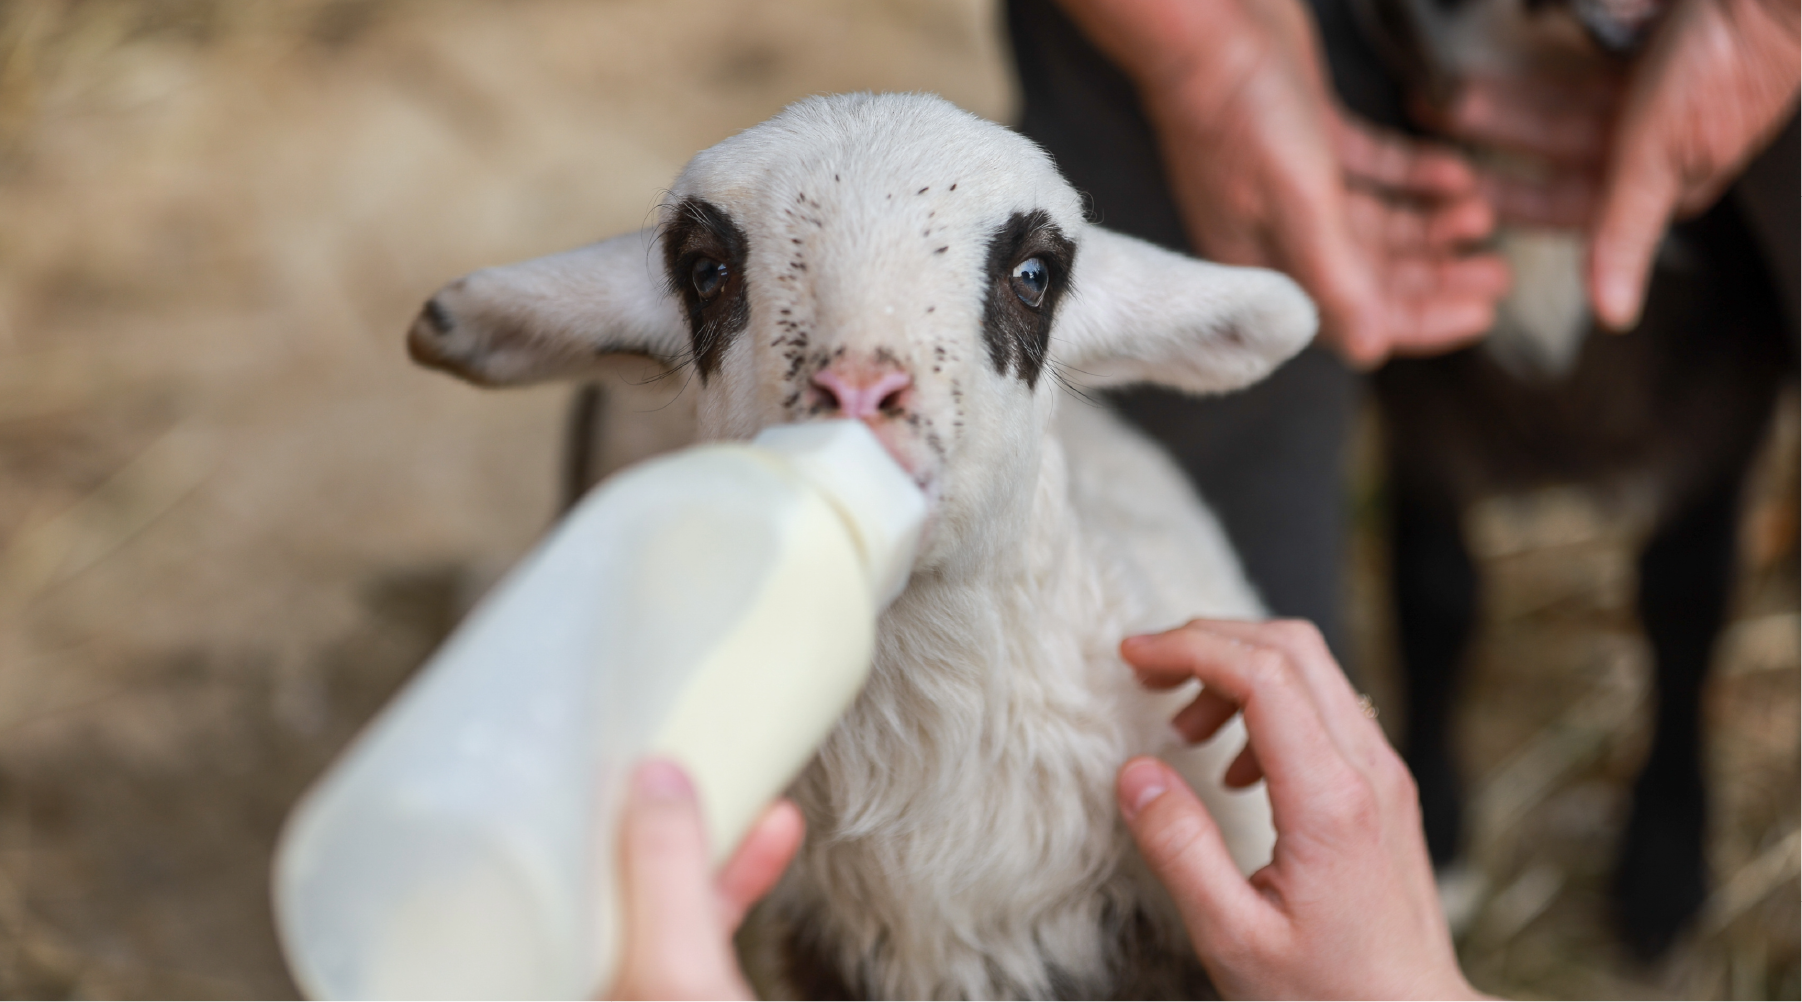 Lamb Bottle Feeding Experience at Wentworth Family Farm